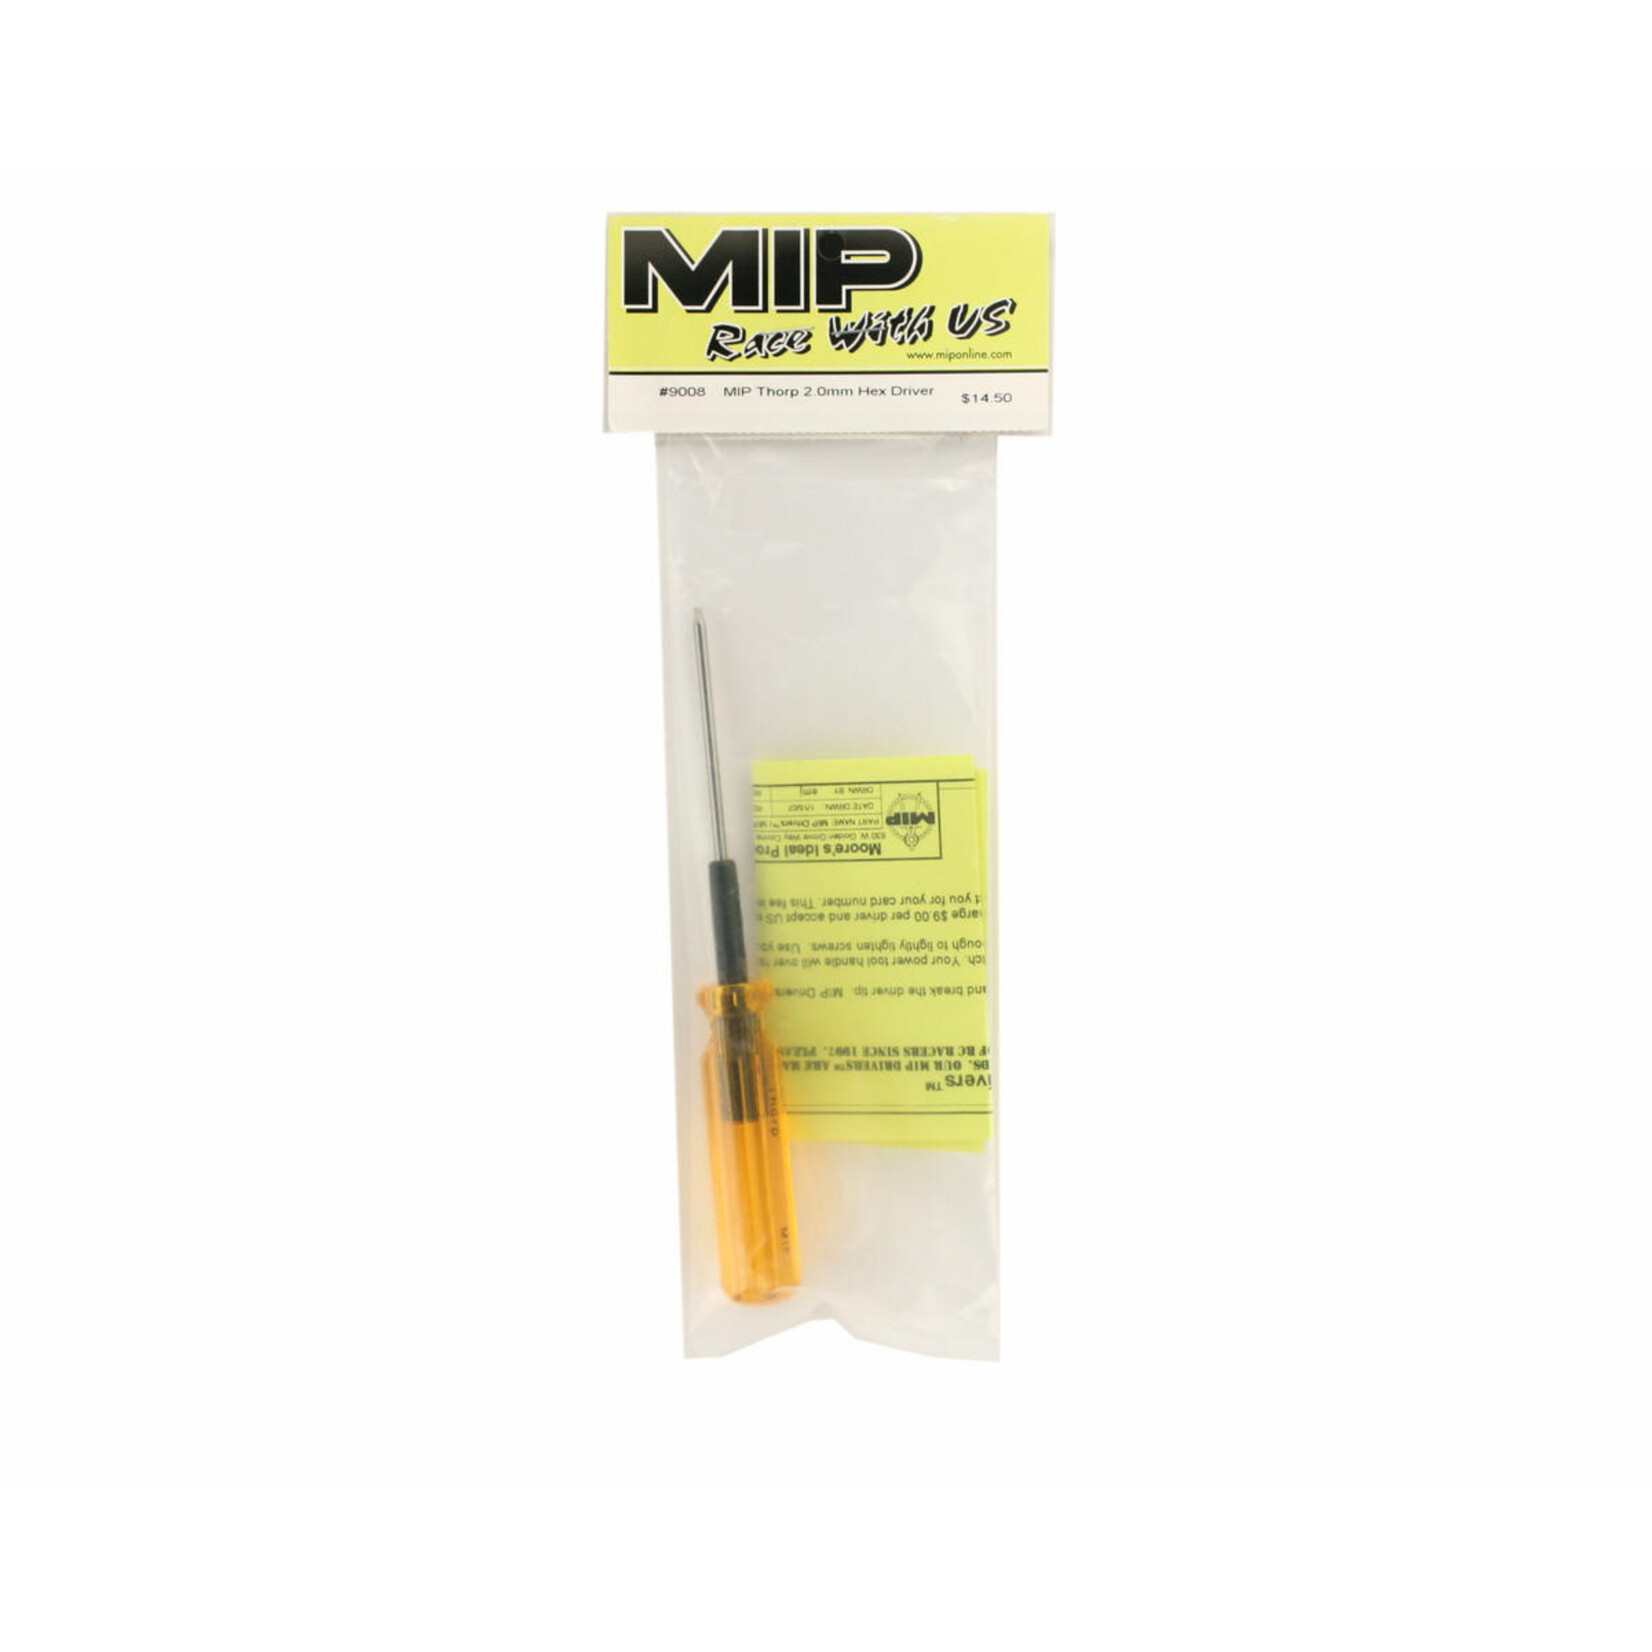 MIP MIP Thorp Hex Driver (2.0mm) #9008